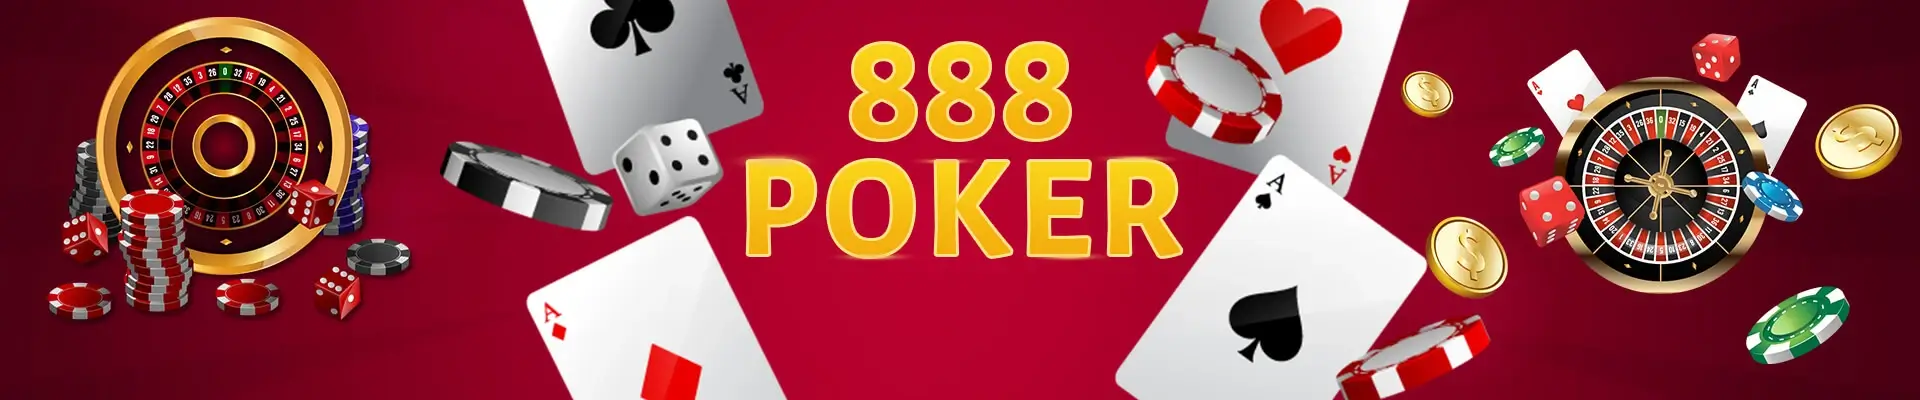 Custom 888 Poker Game Development Company | 888 Poker Game Developers for Hire